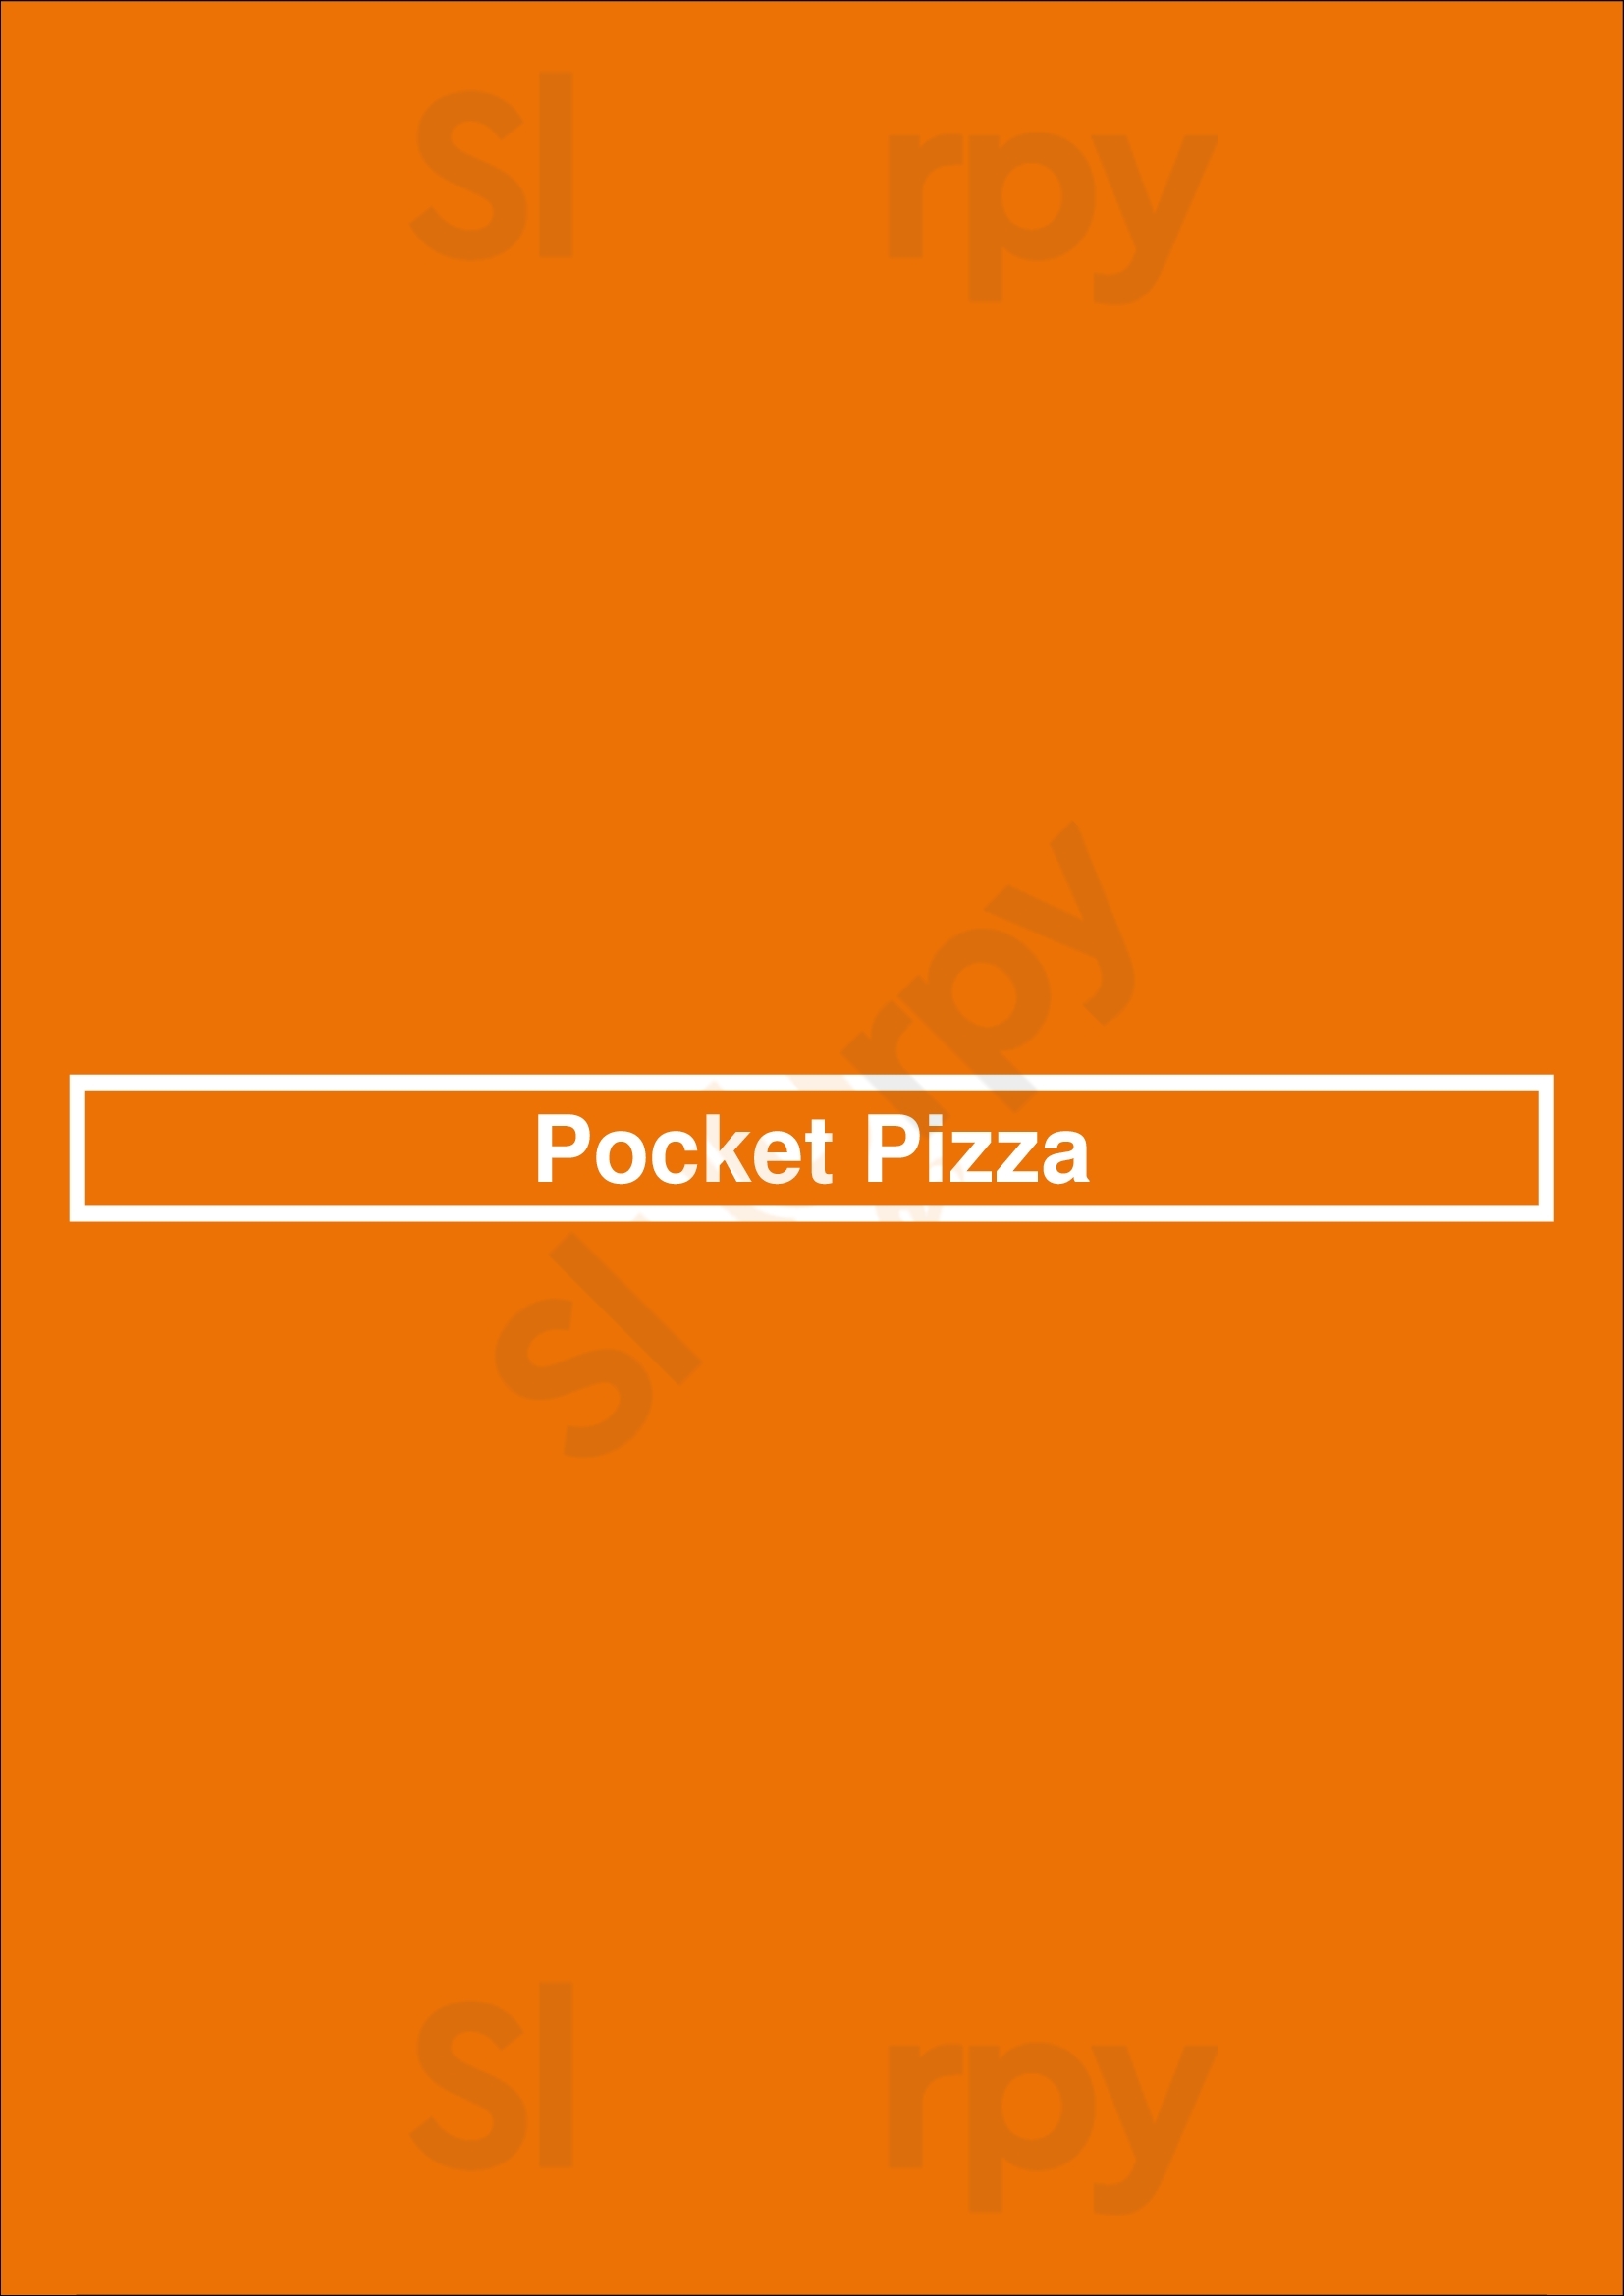 Pocket Pizza Manly Menu - 1